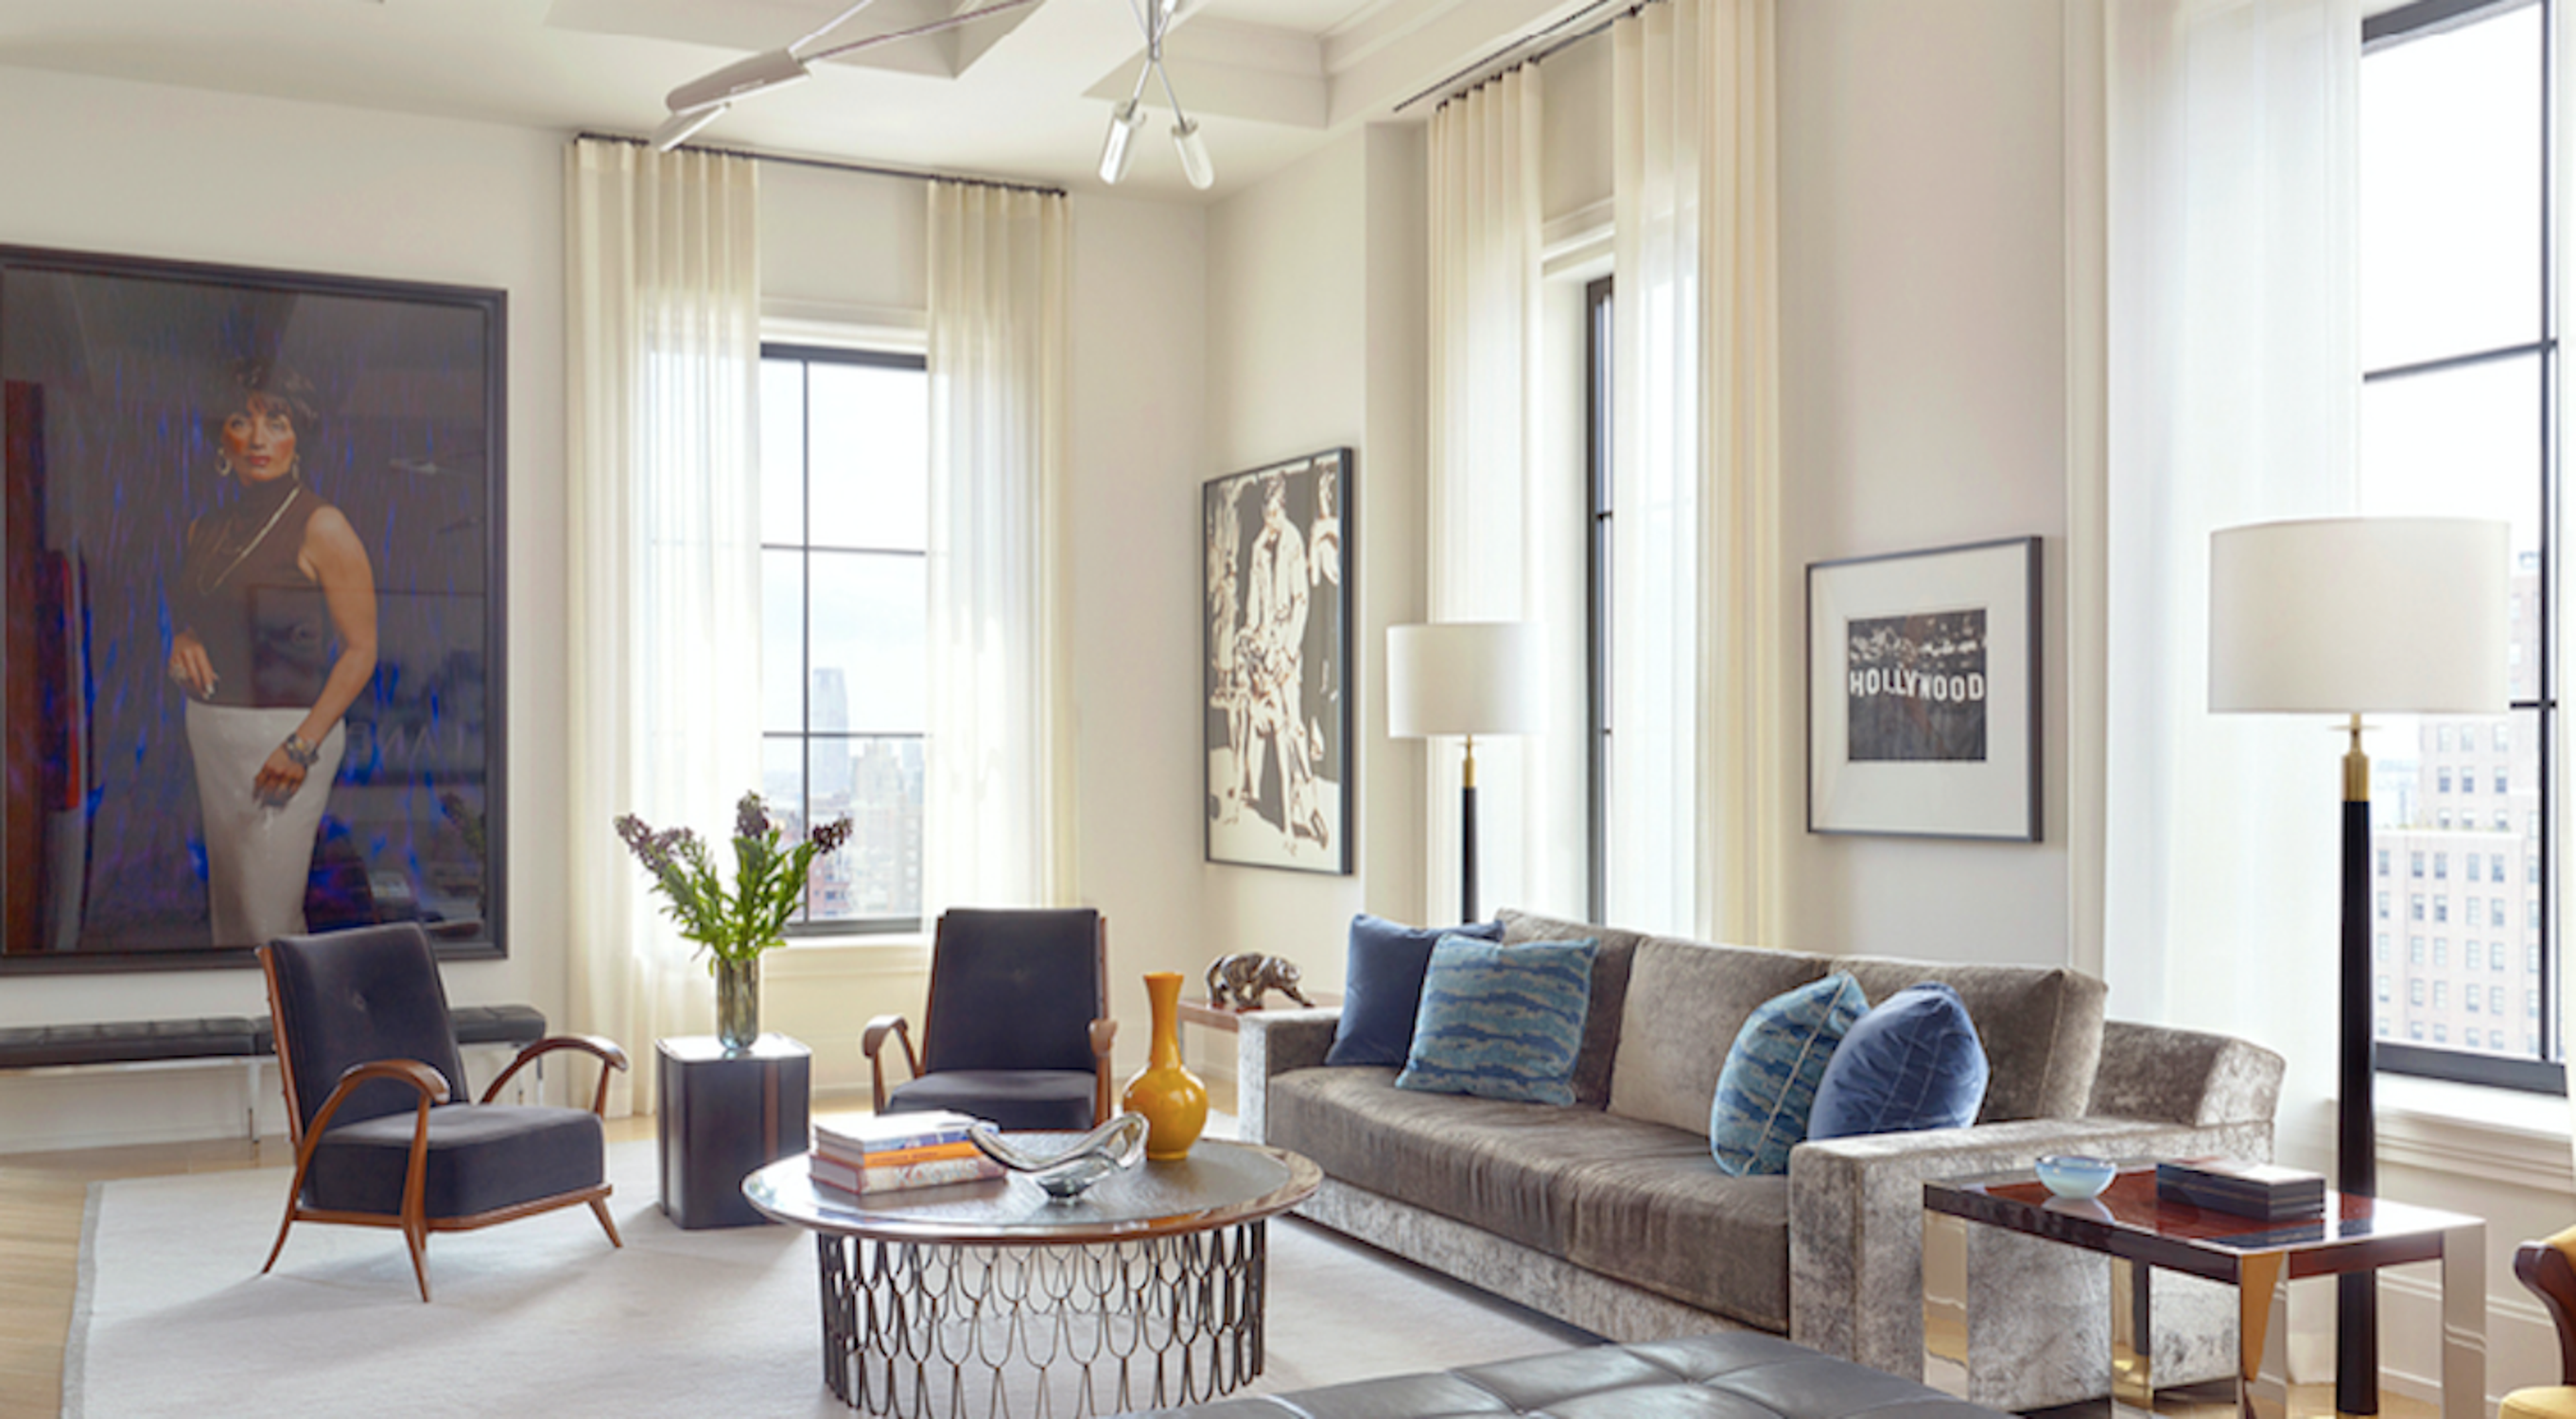 Living Room by David Scott Interiors on 1stdibs